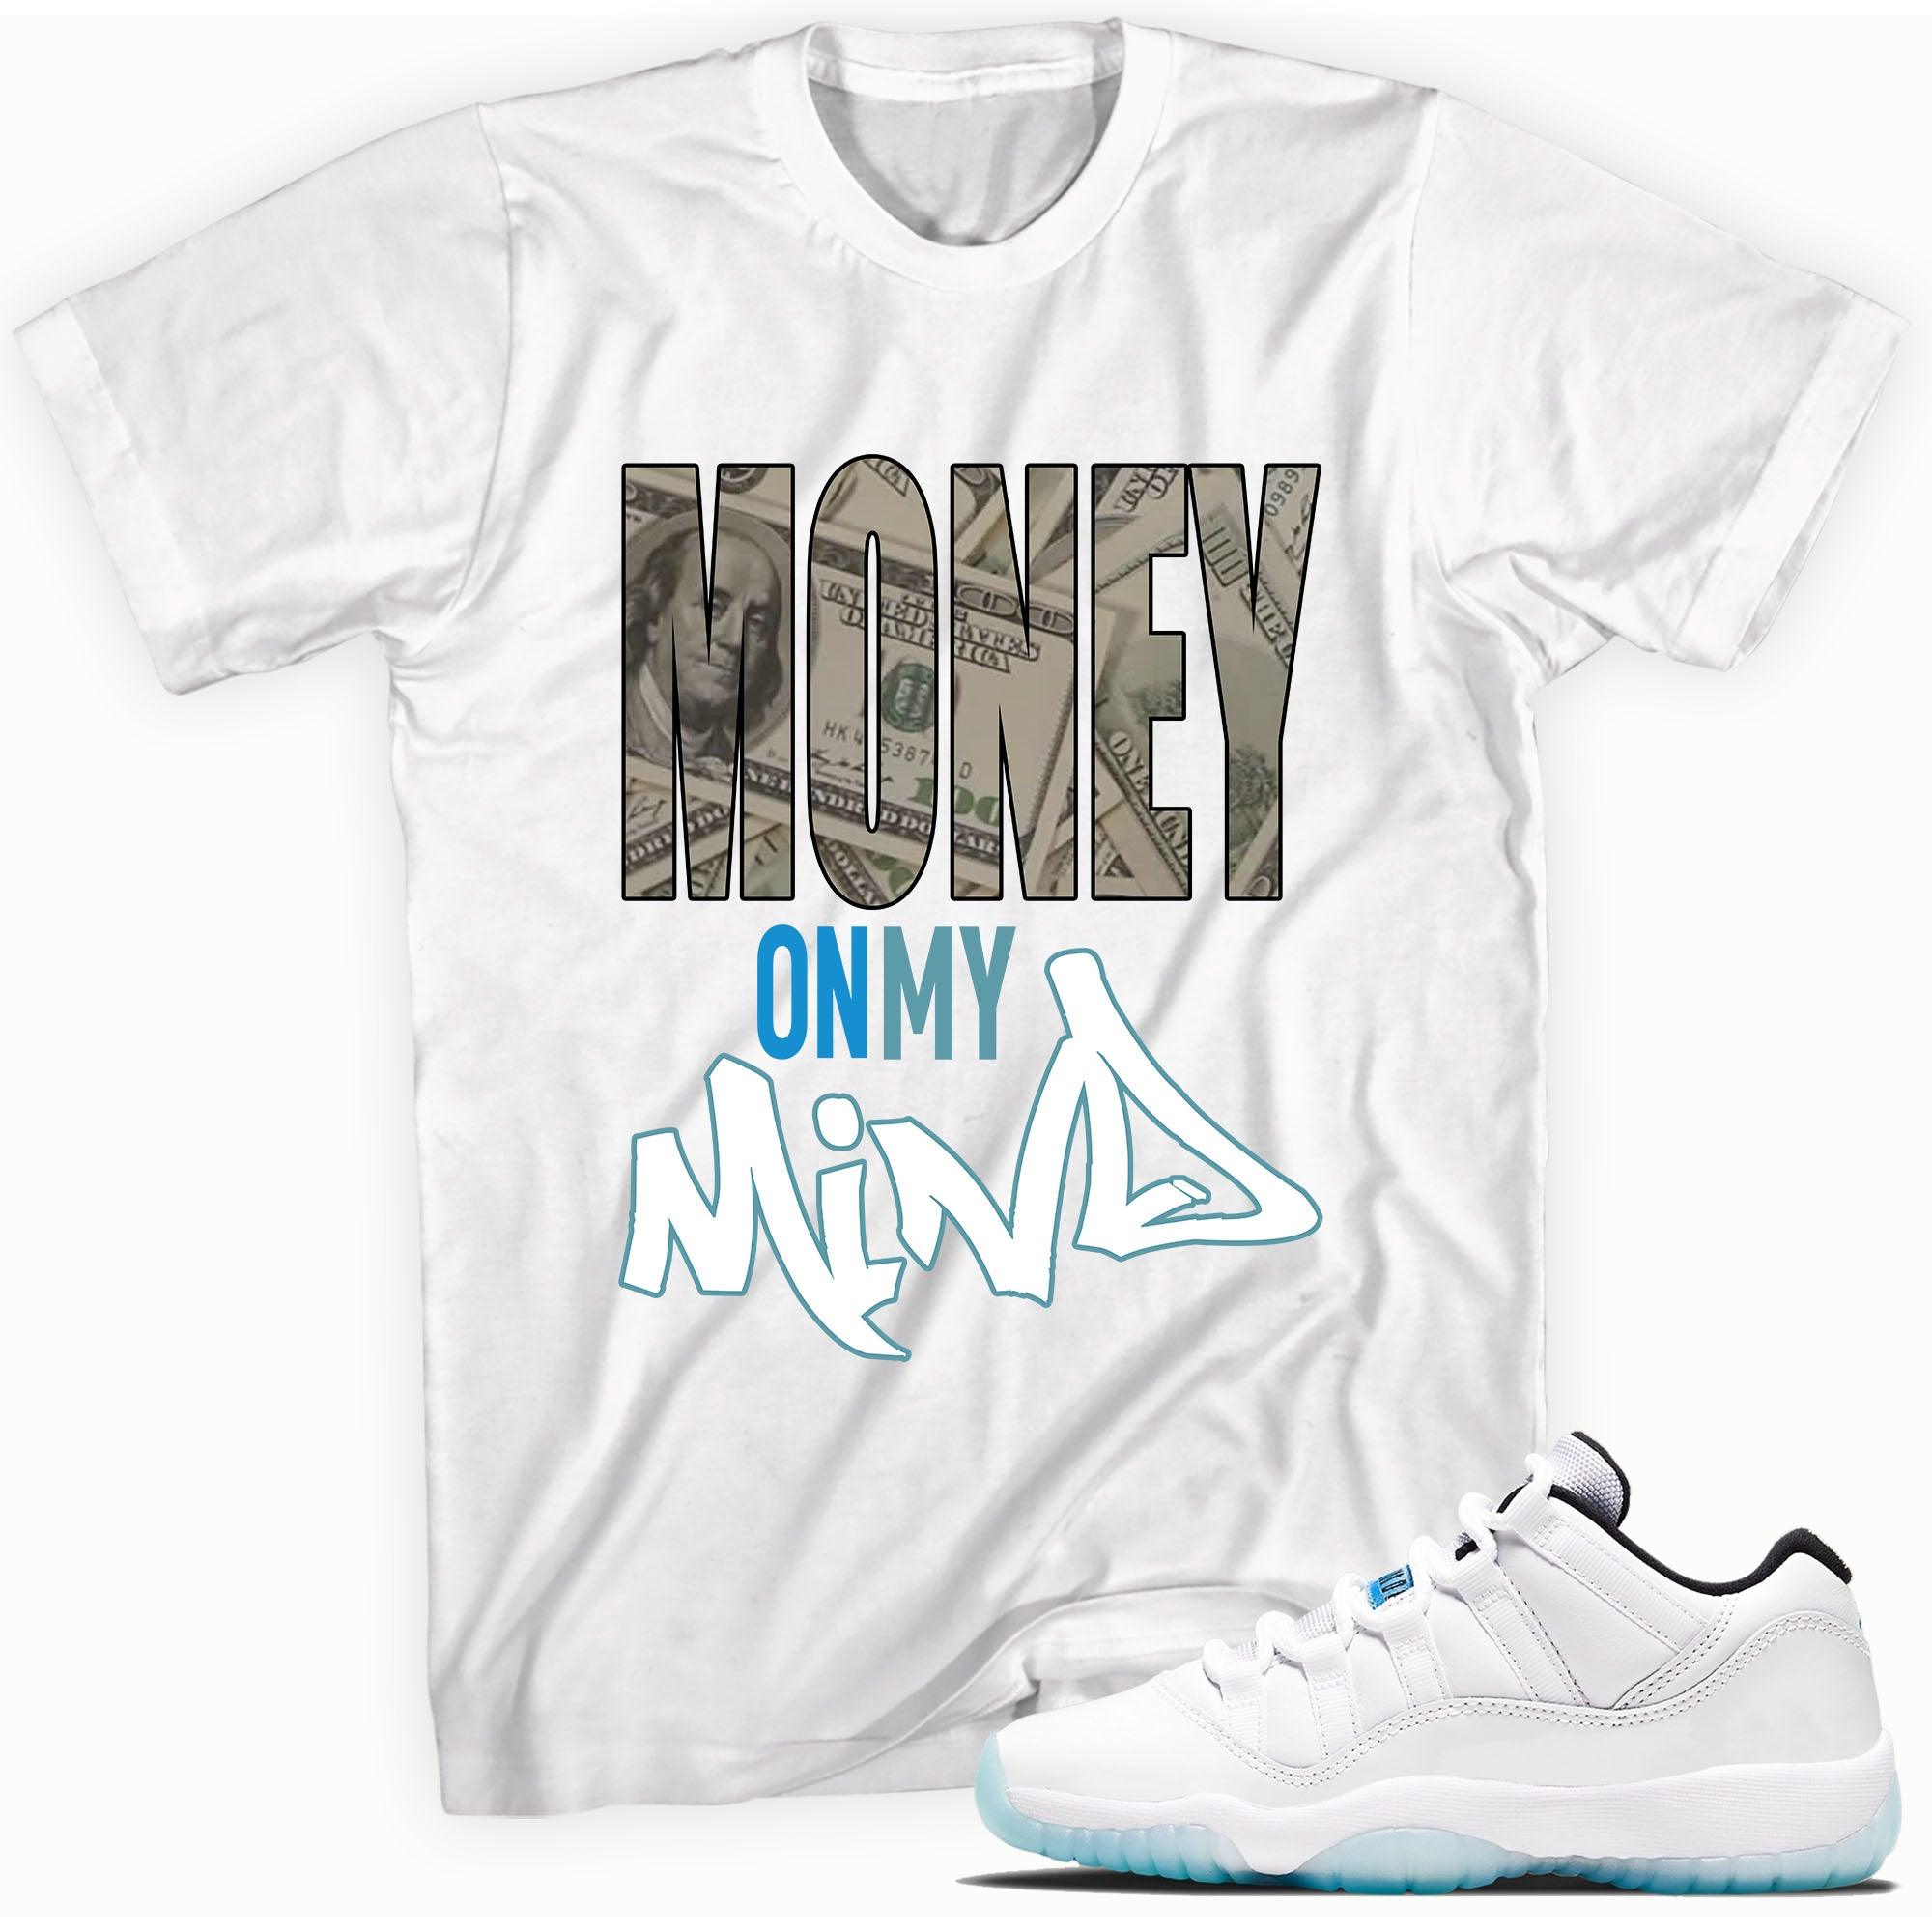 Money On My Mind Shirt AJ 11 Retro Low Legend Blue photo